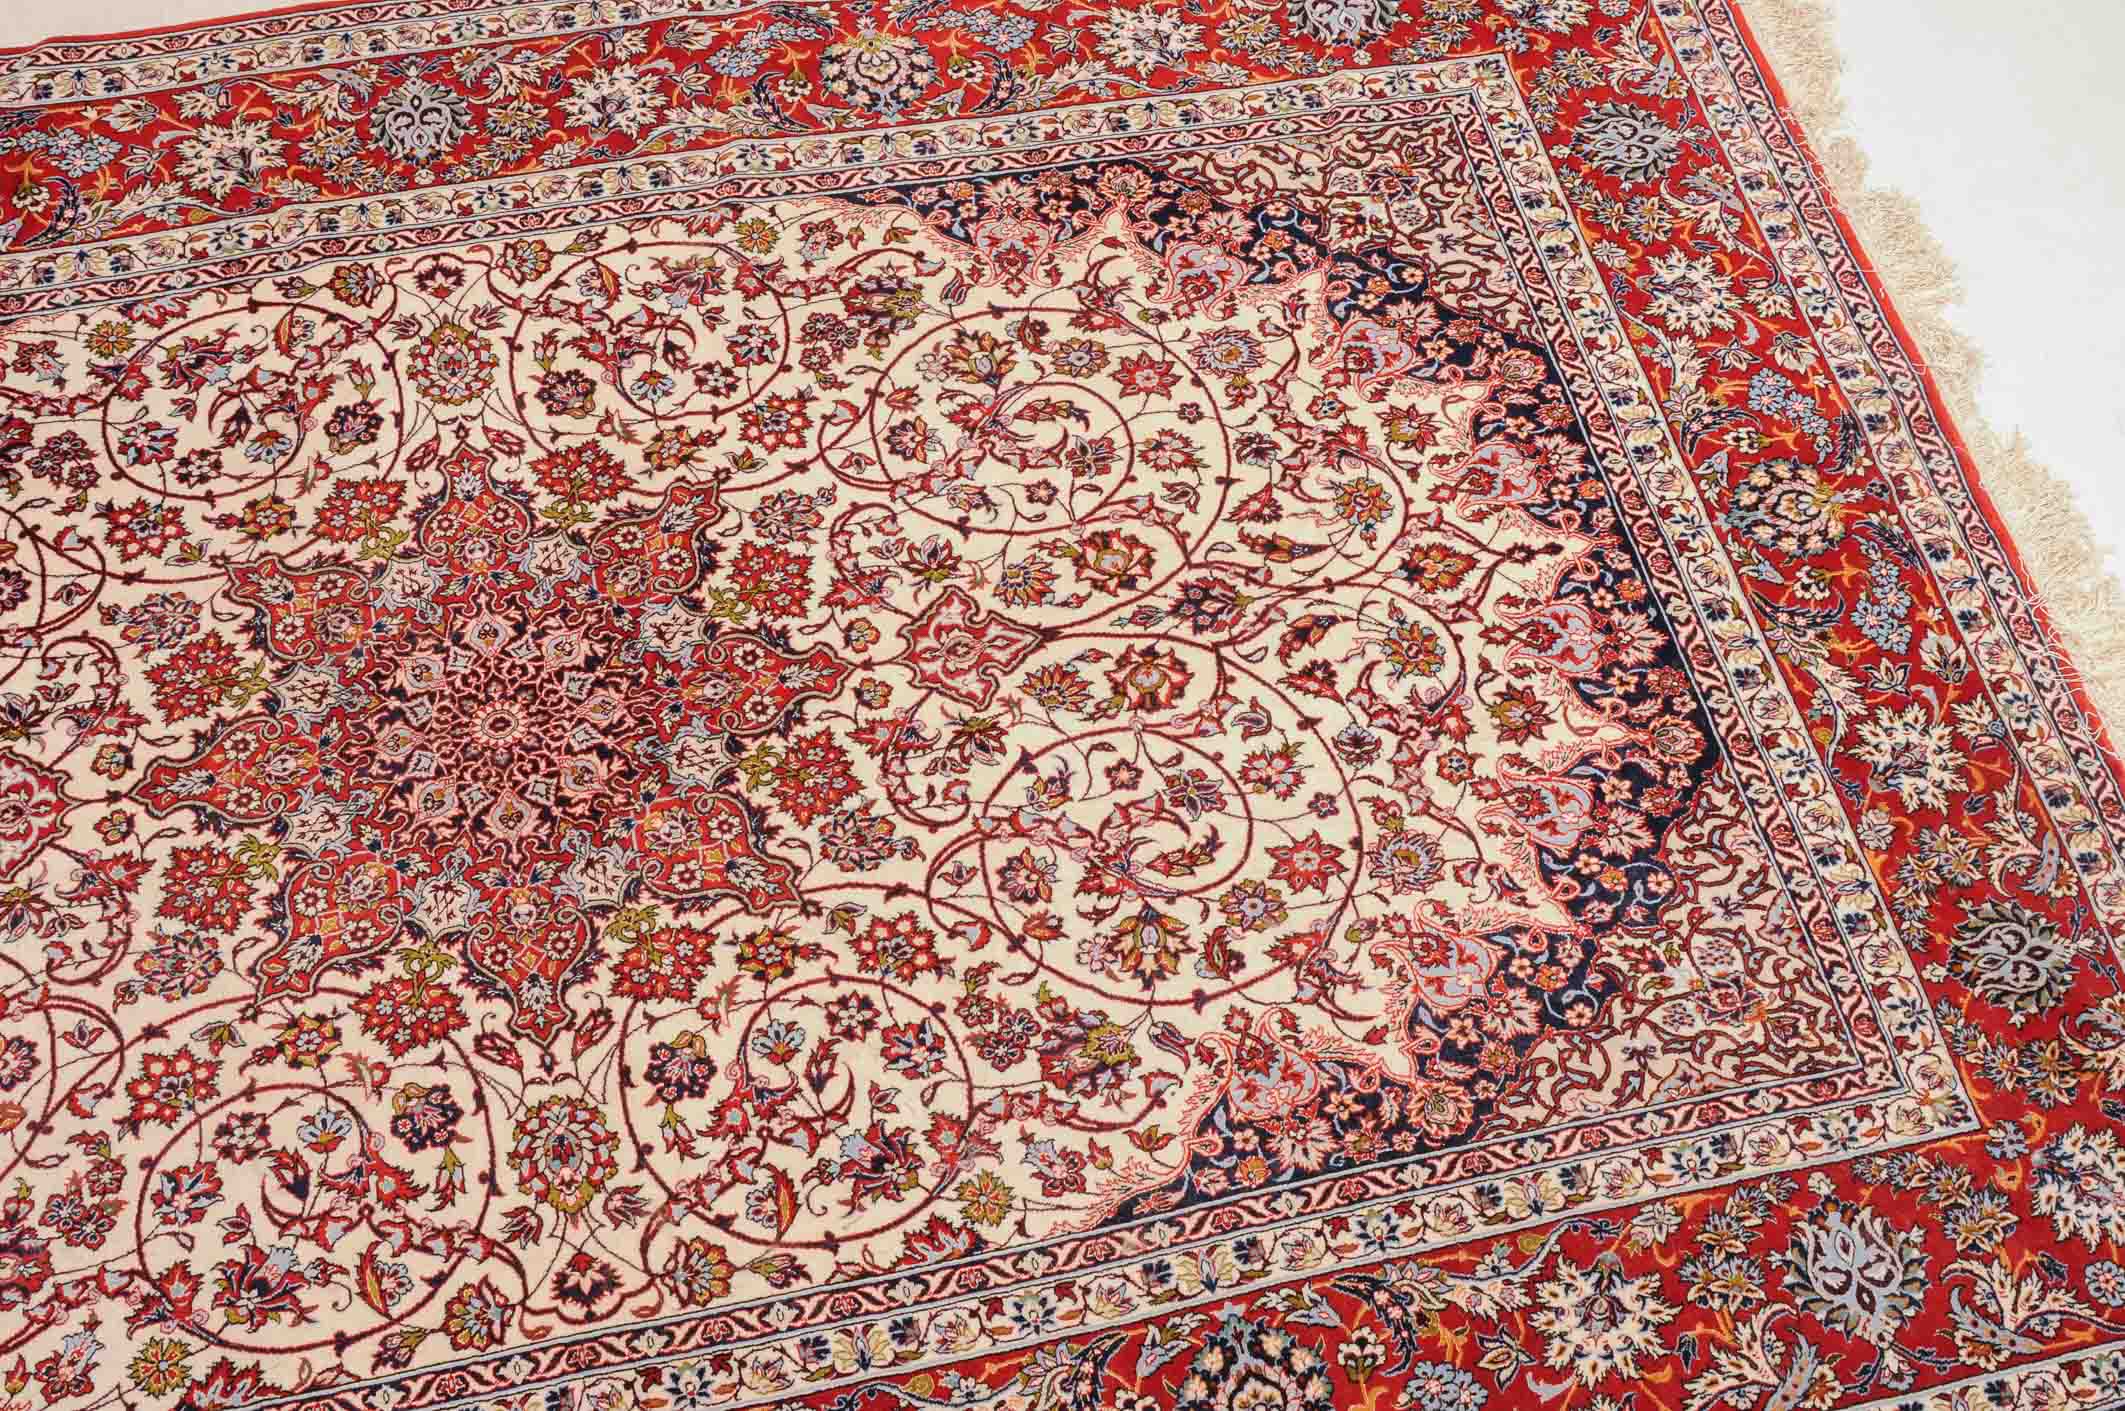 Isfahan - Image 15 of 18